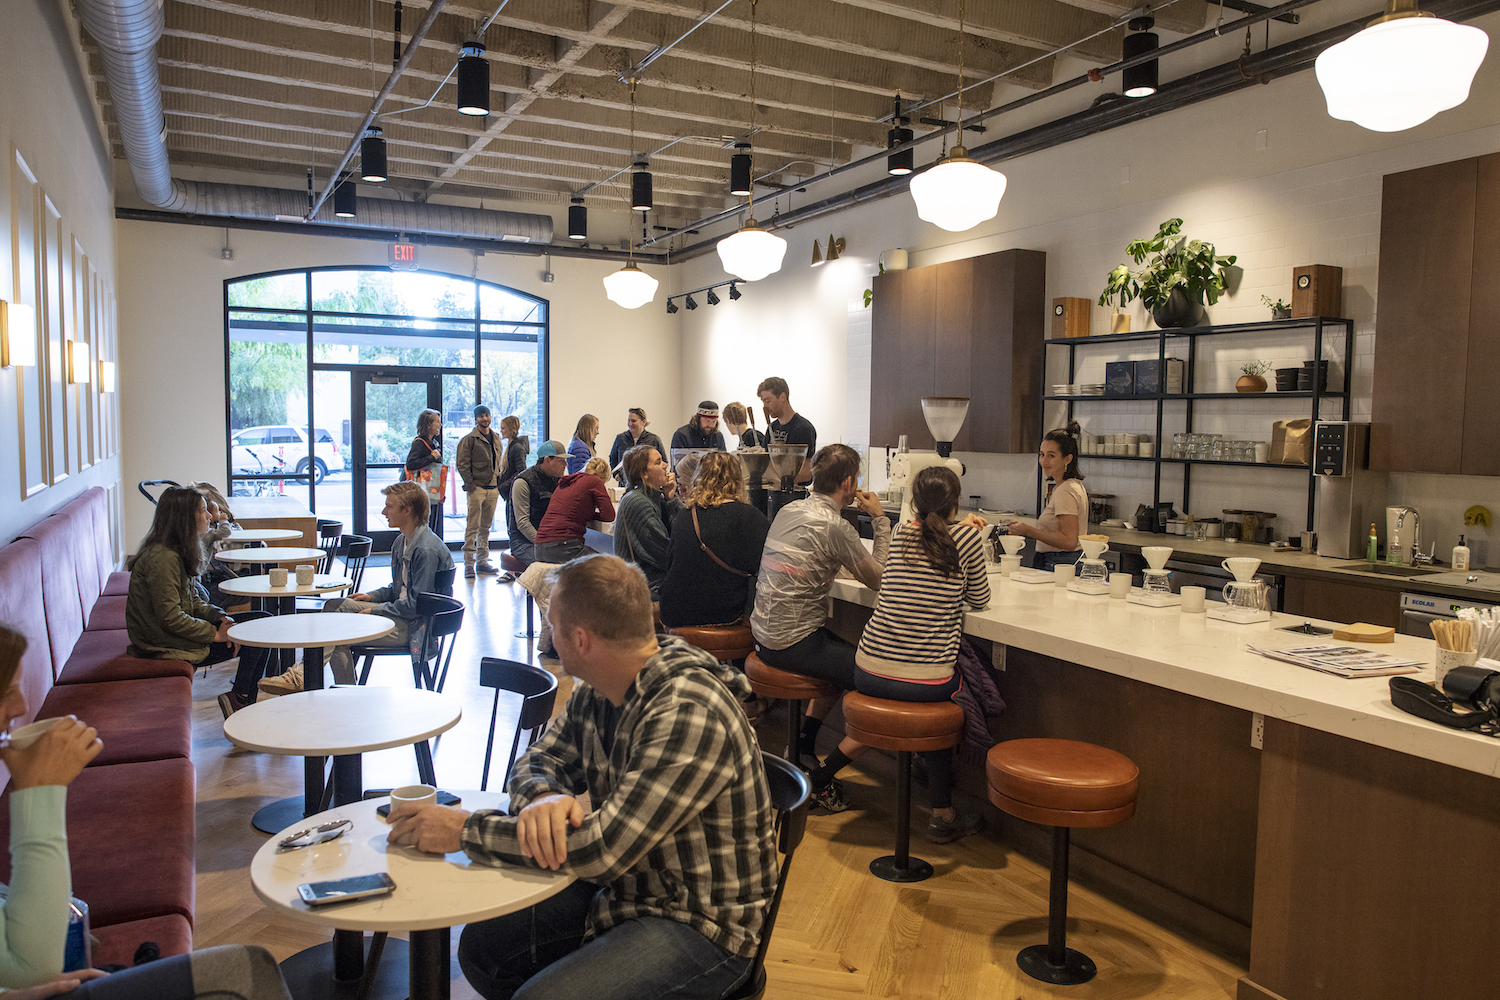 Grant Shealy runs Neckar Coffee in Boise, Idaho.